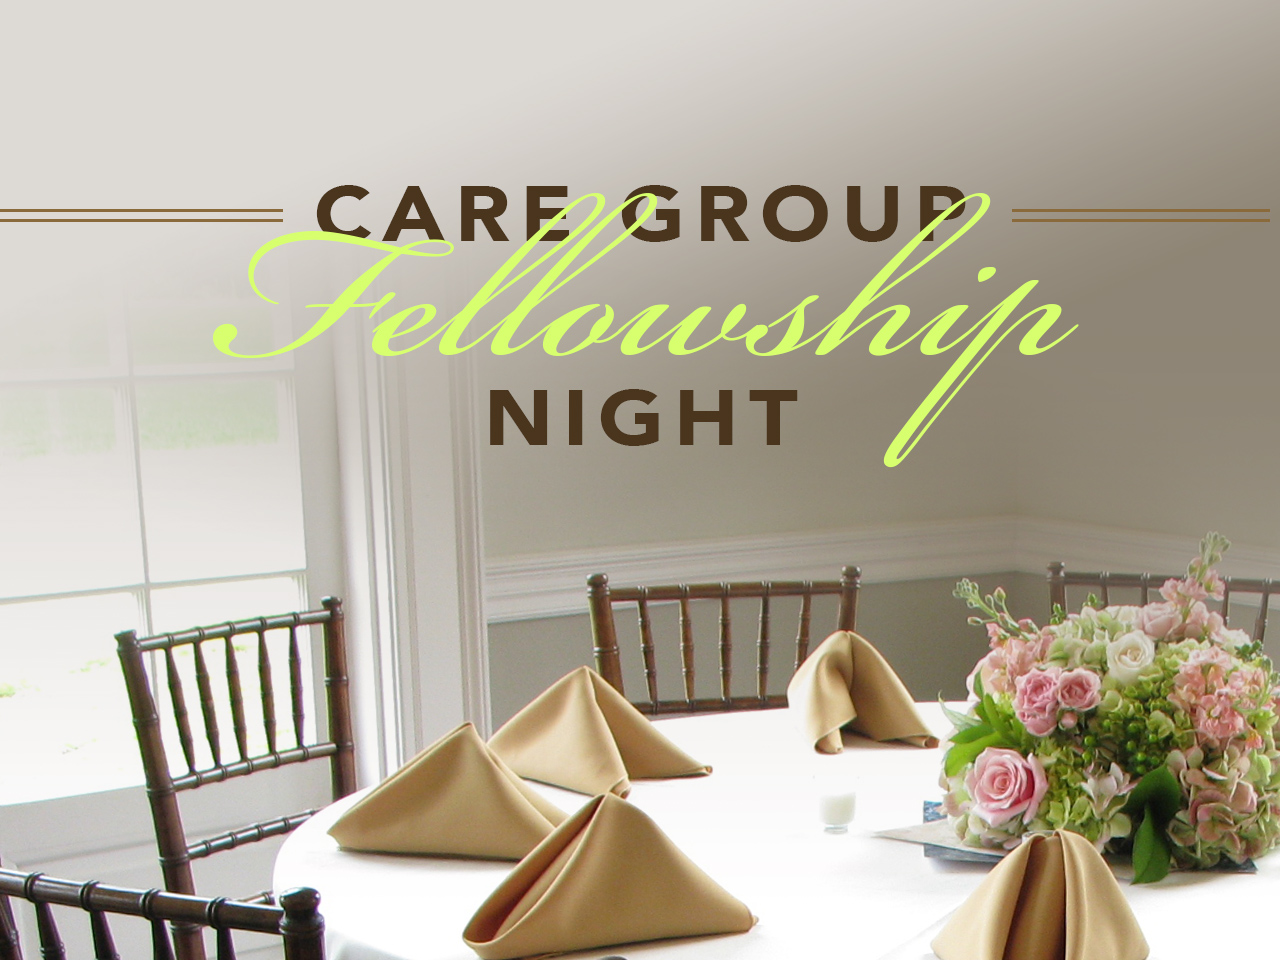 Care Group Fellowship Night